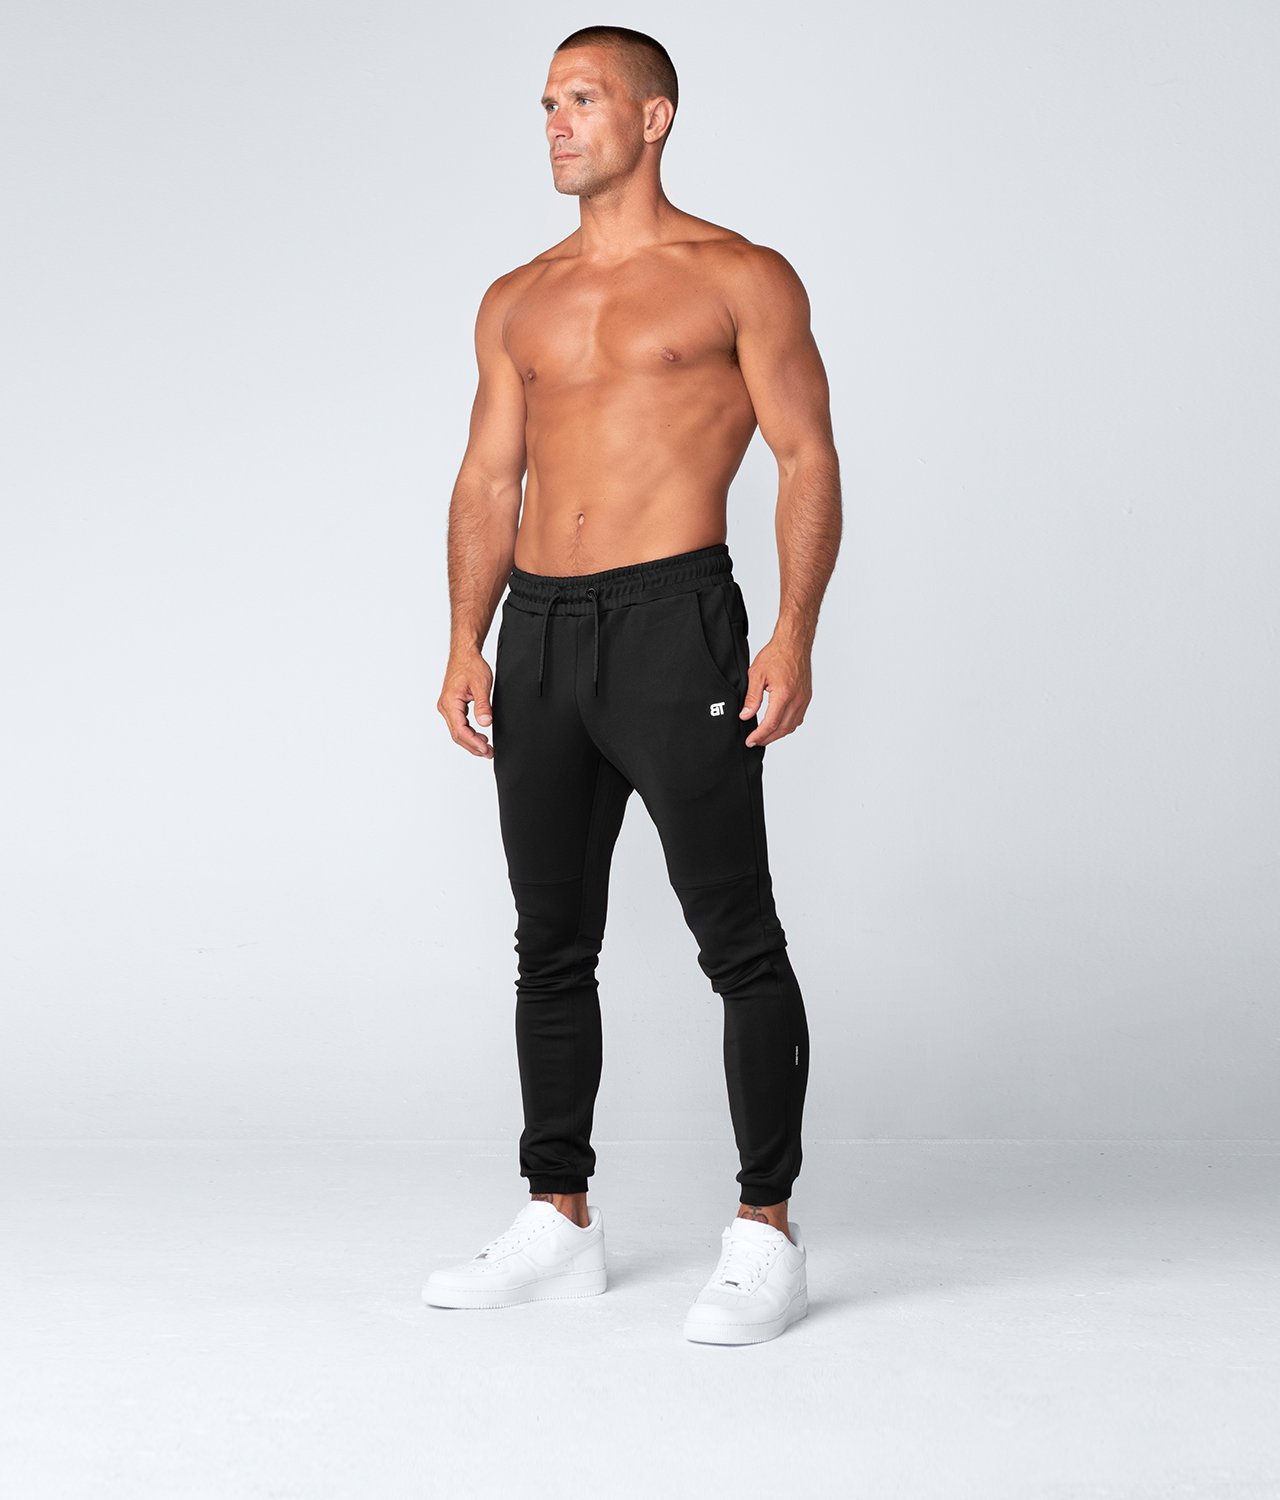 Athletic Workout Jogger pants for Men: How To Wear Jogger Pants – Born Tough